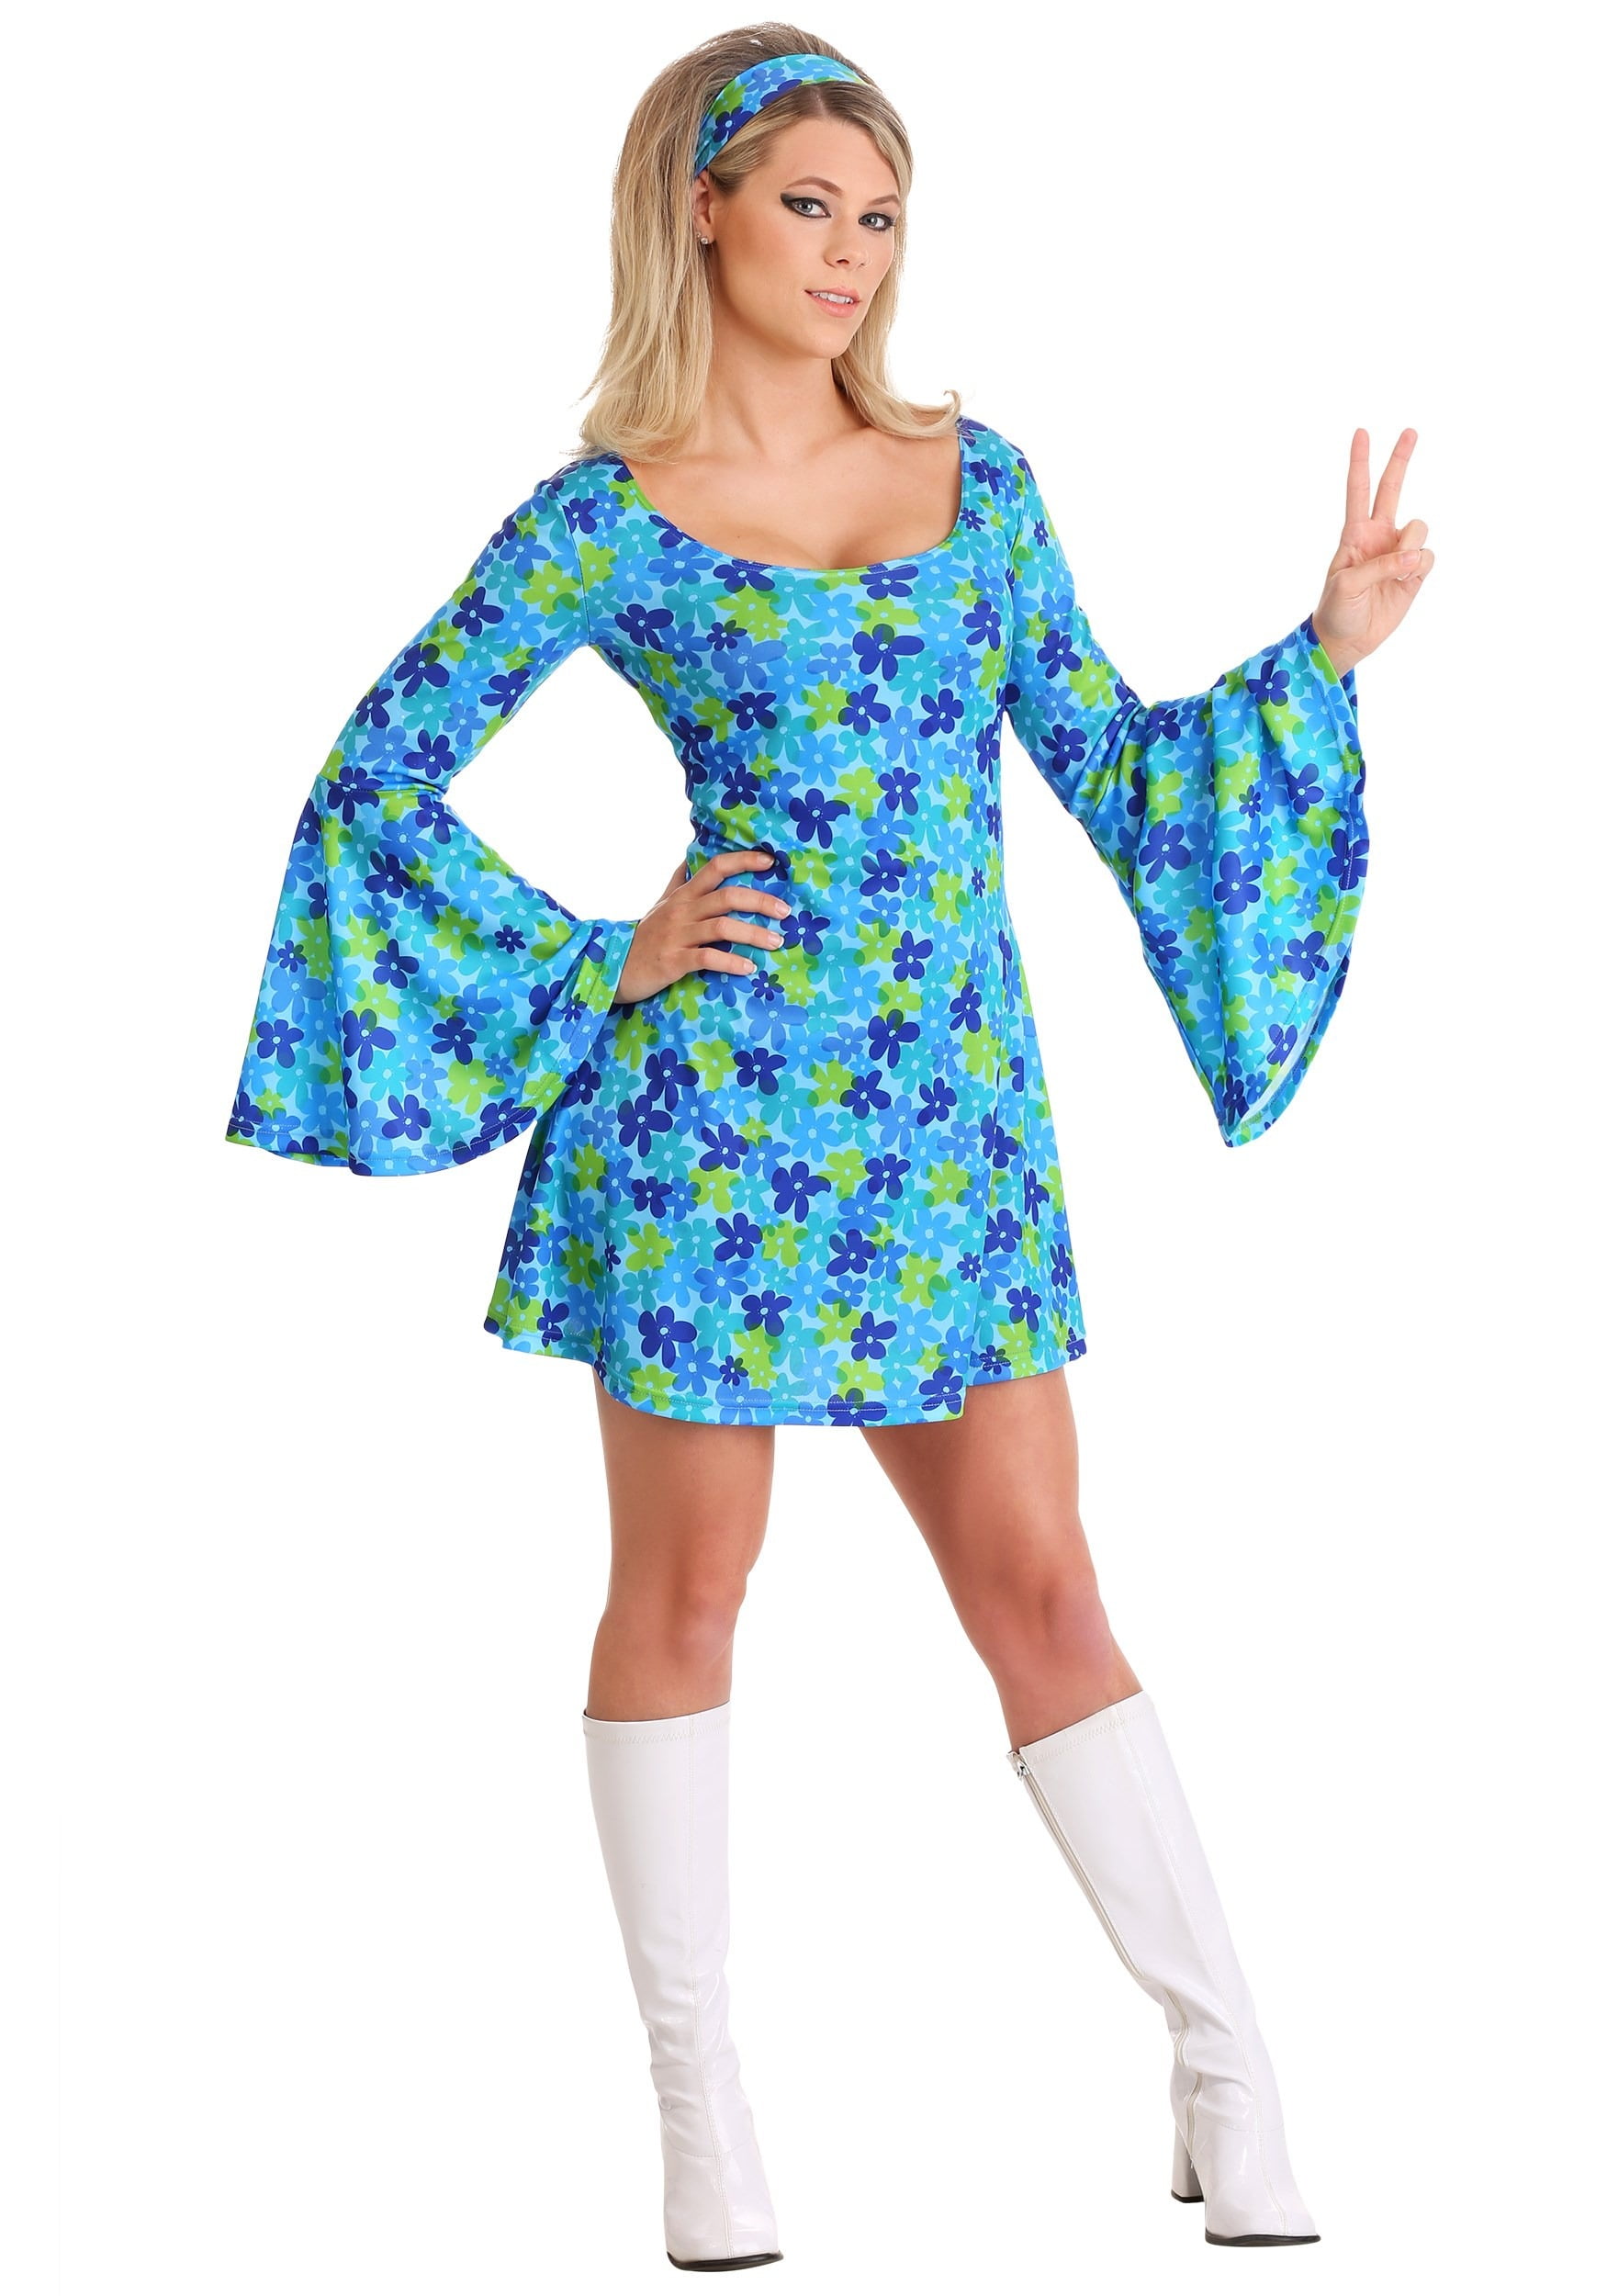 60's vintage girls dress mod mini skirt psychedelic flower power costume age 2-5 